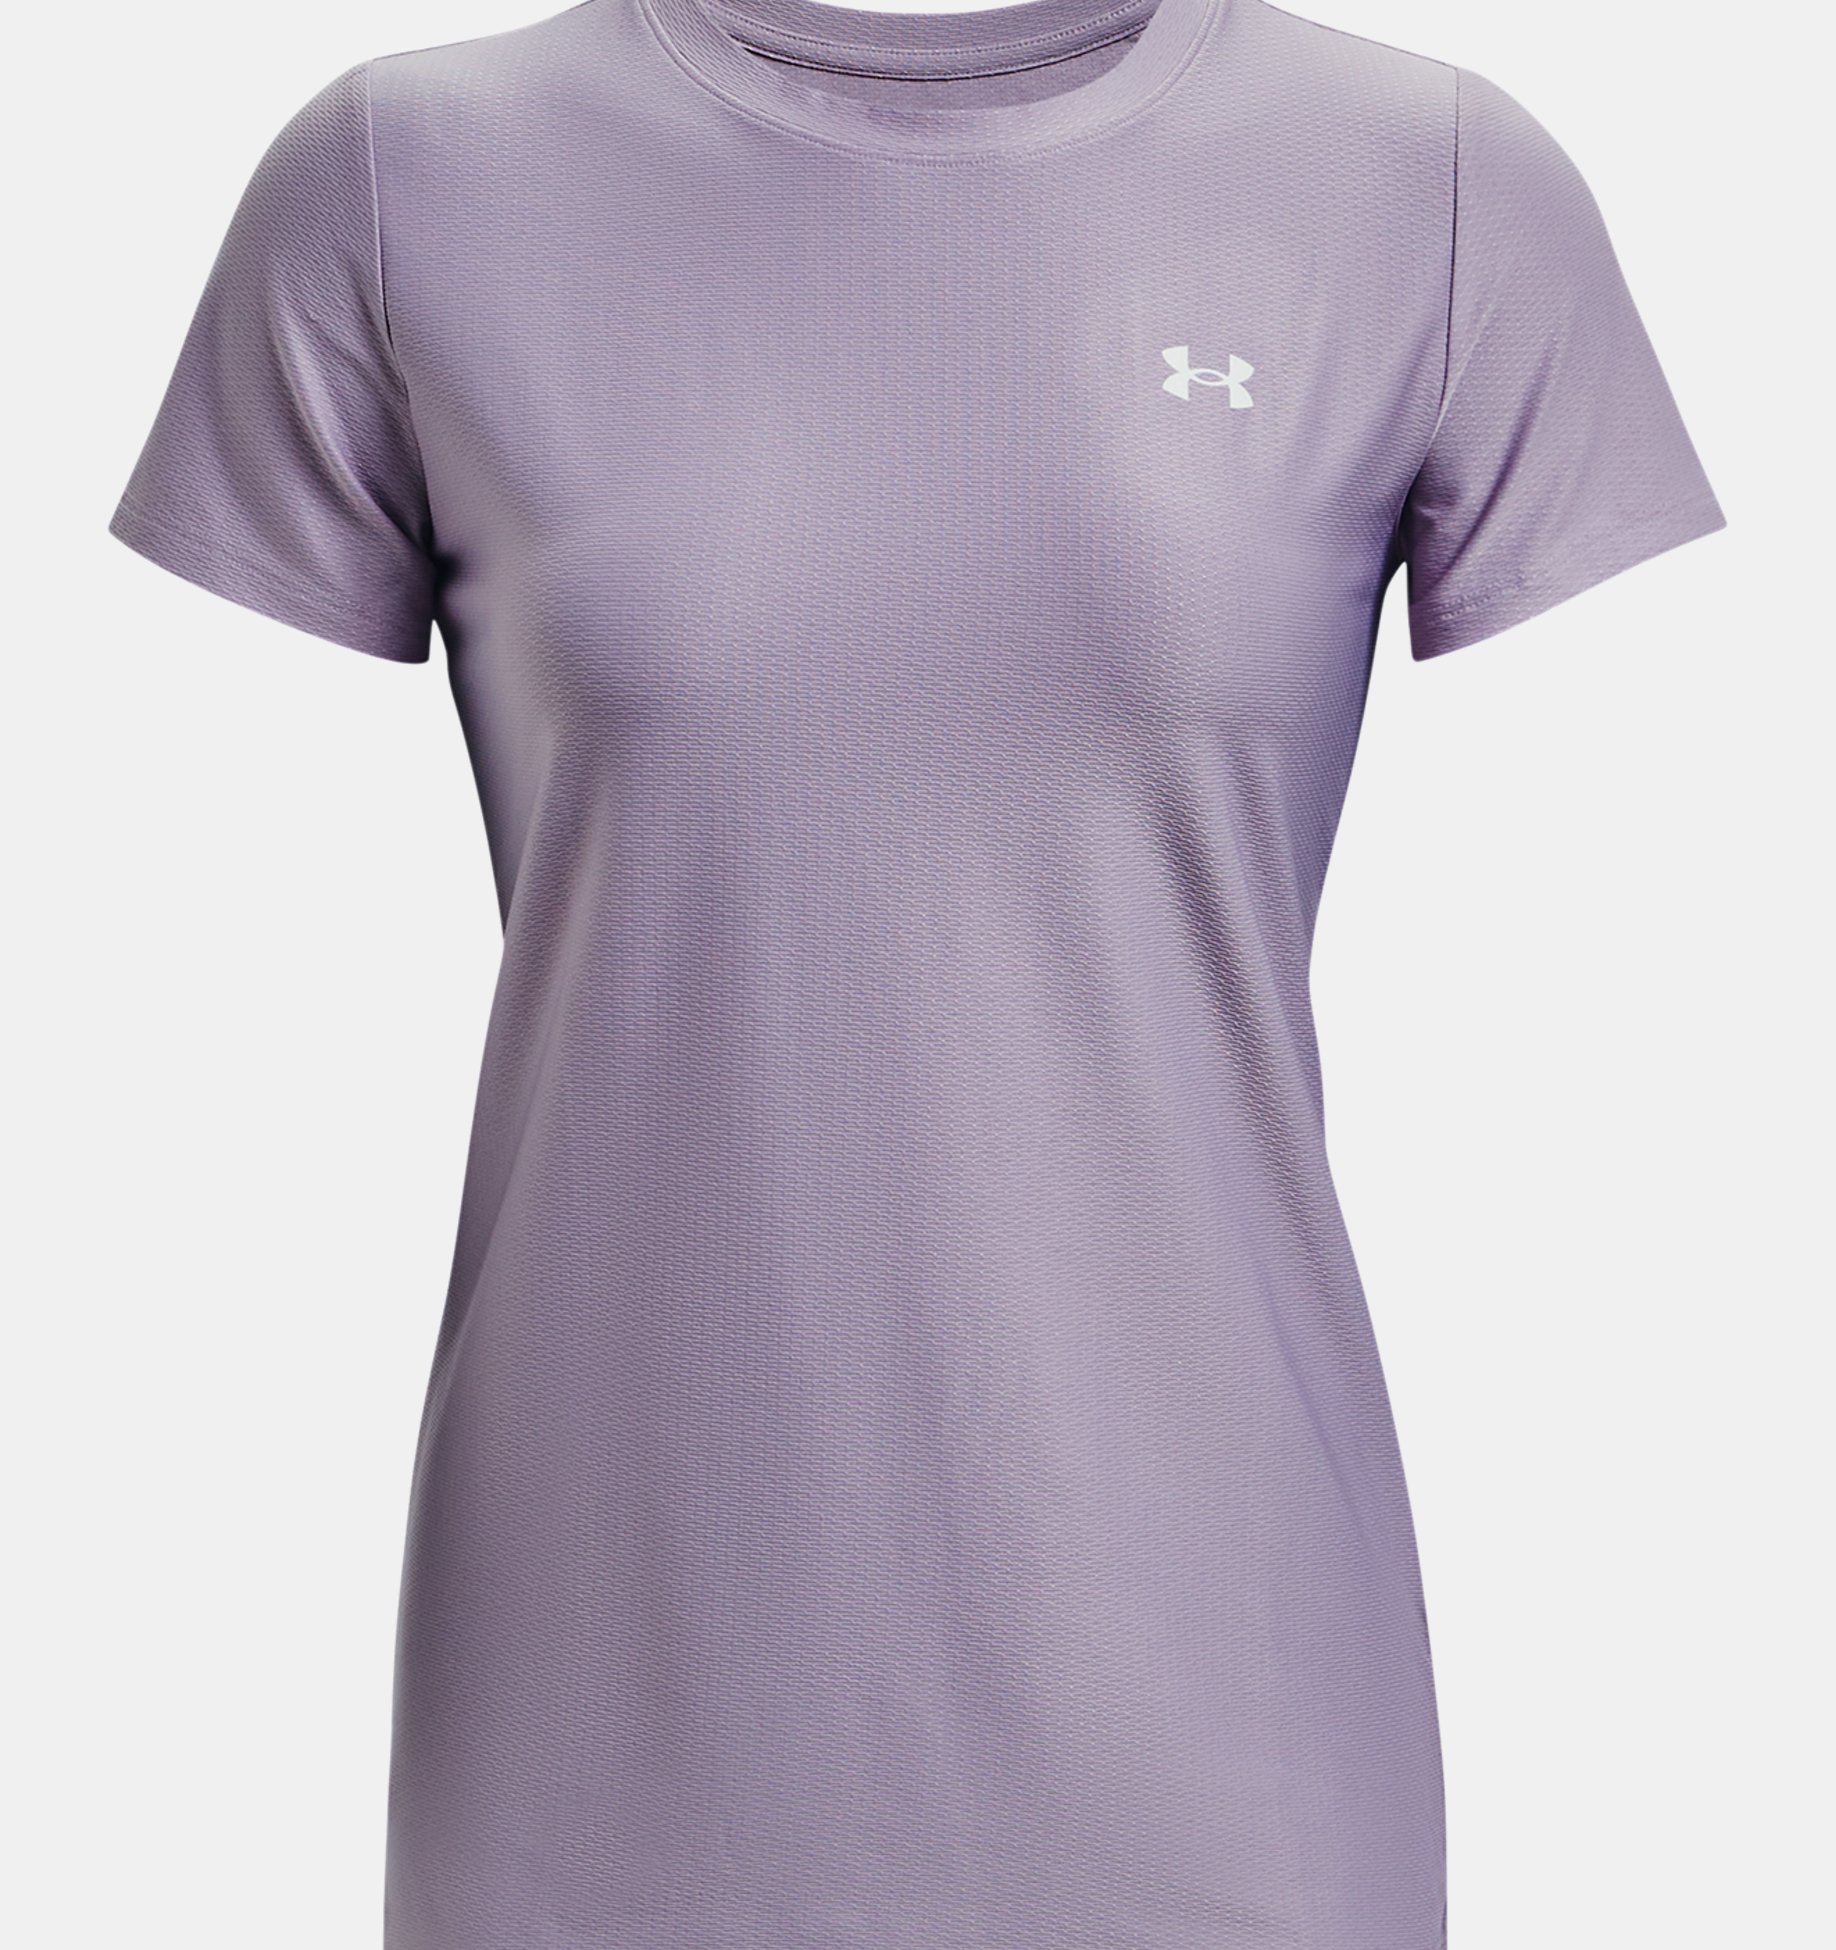 Girls Kids Youth Under Armour Heat Gear Shirt NEW Short Sleeve Purple Size Large 